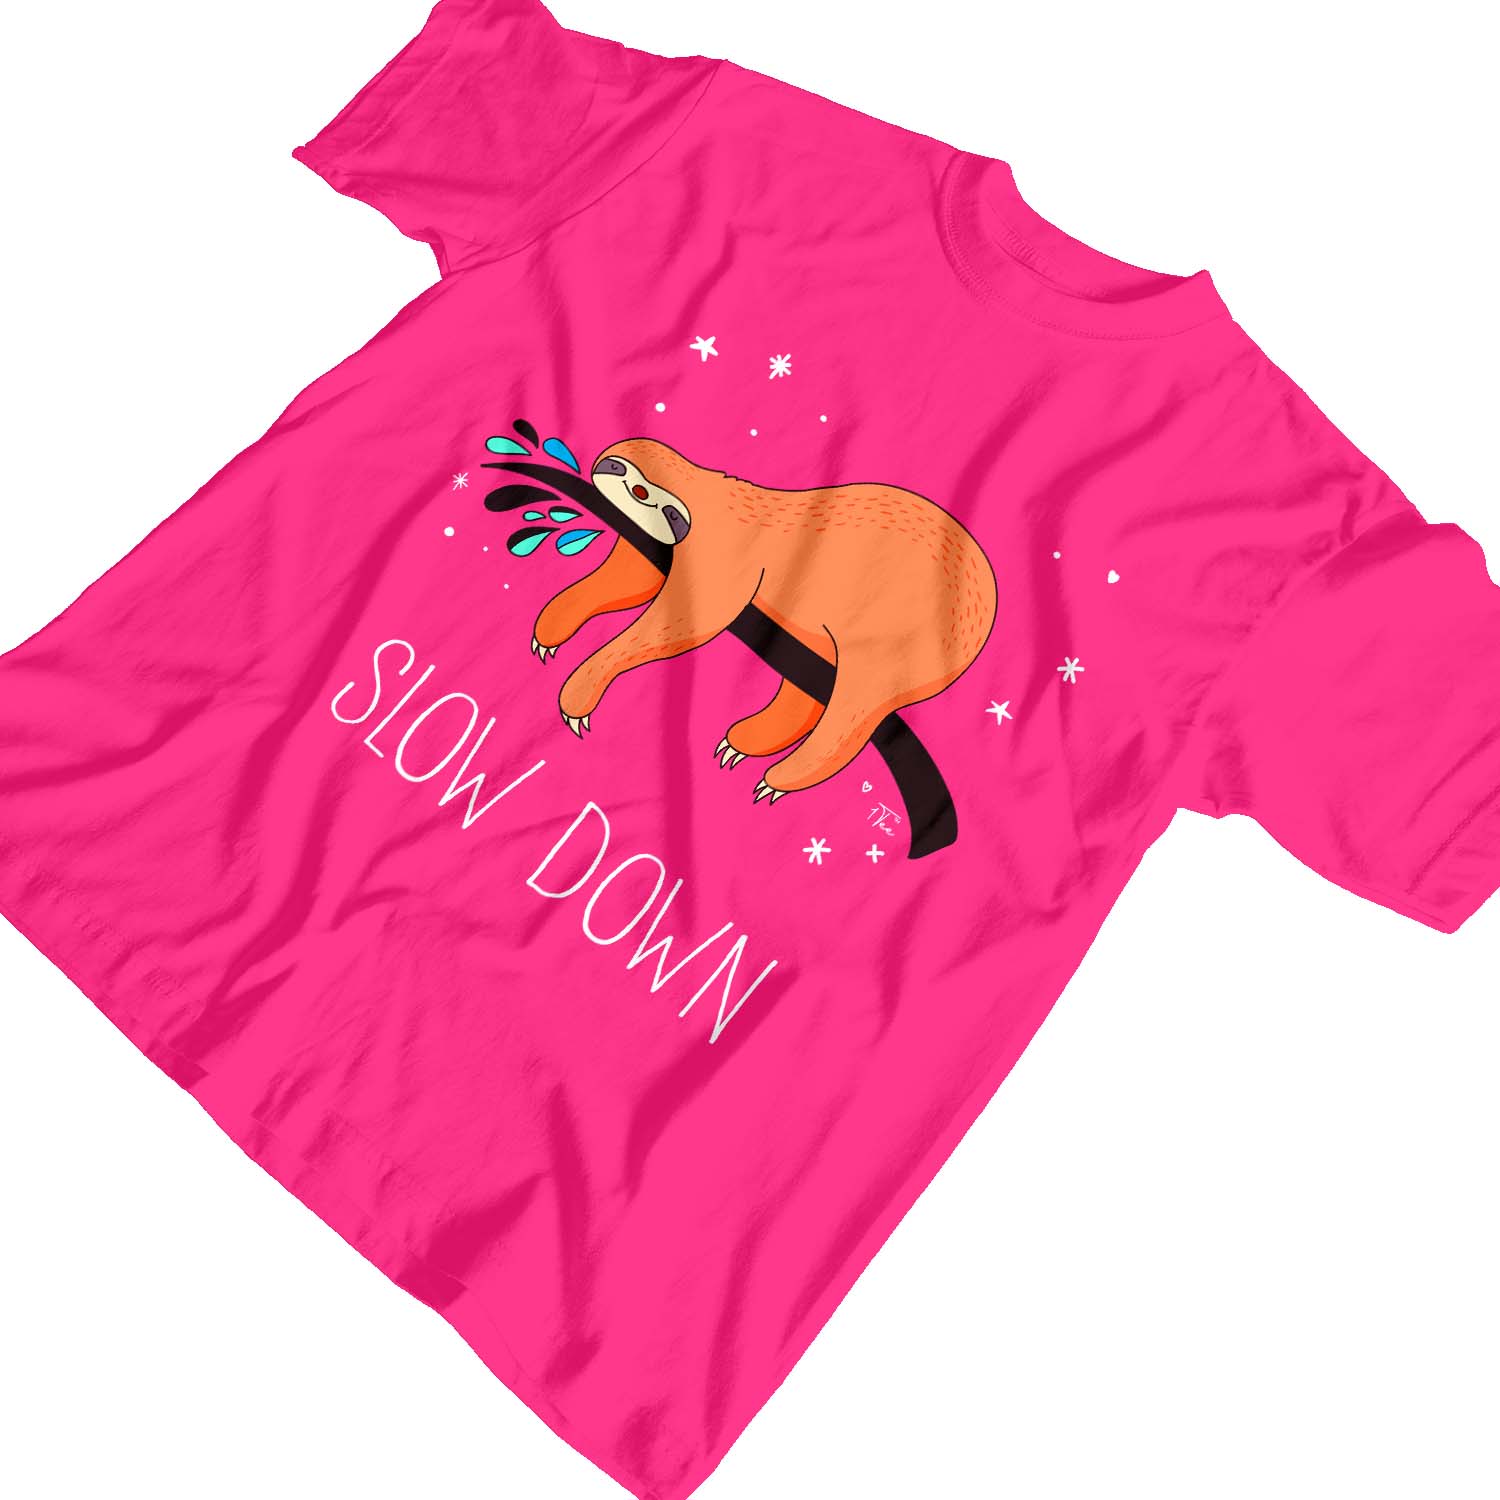 1Tee Kids Girls Slow Down Sloth T-Shirt | eBay